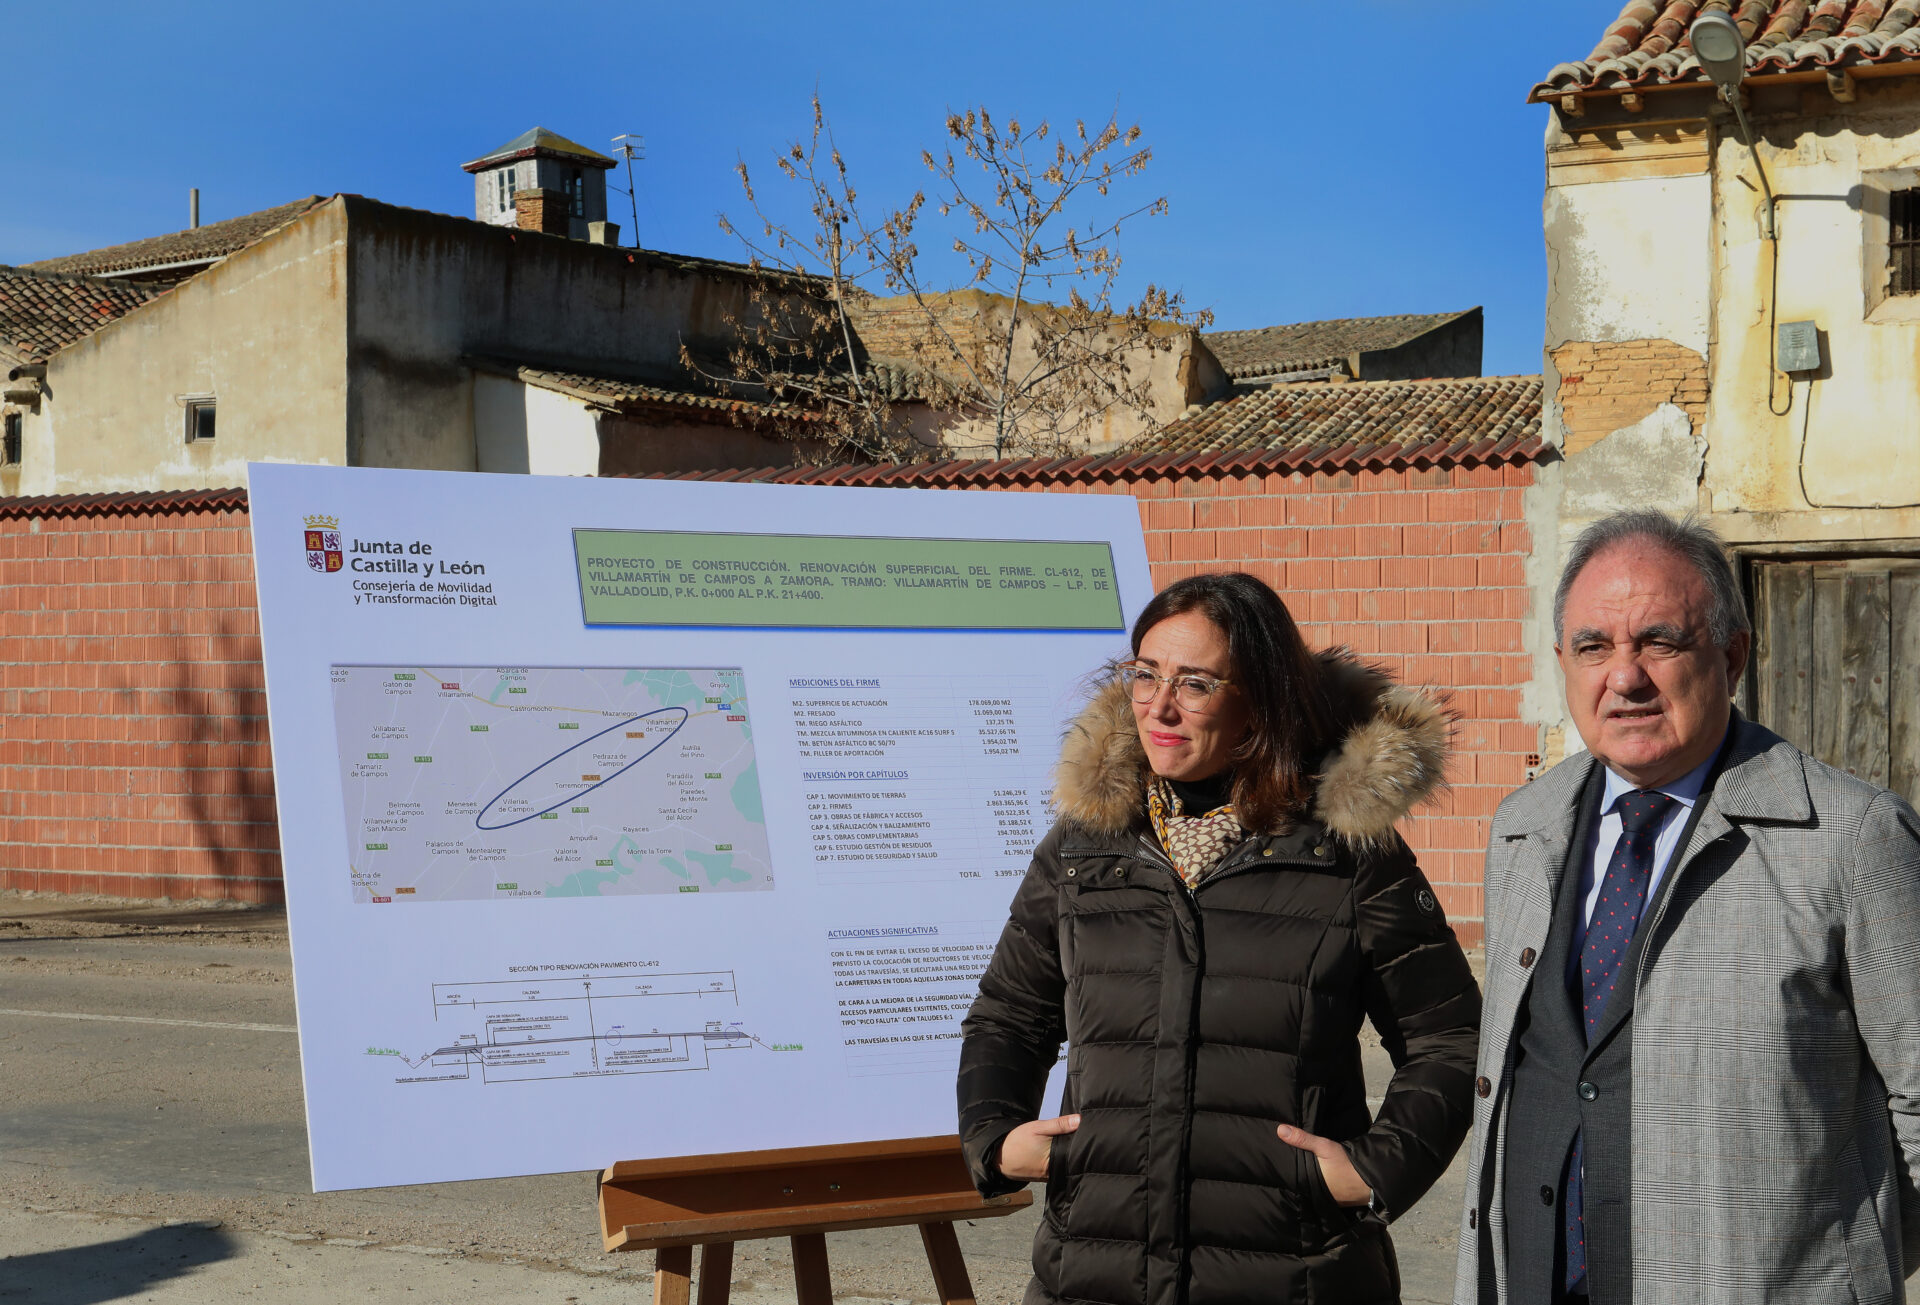 Palencia-Zamora-carretera-obras